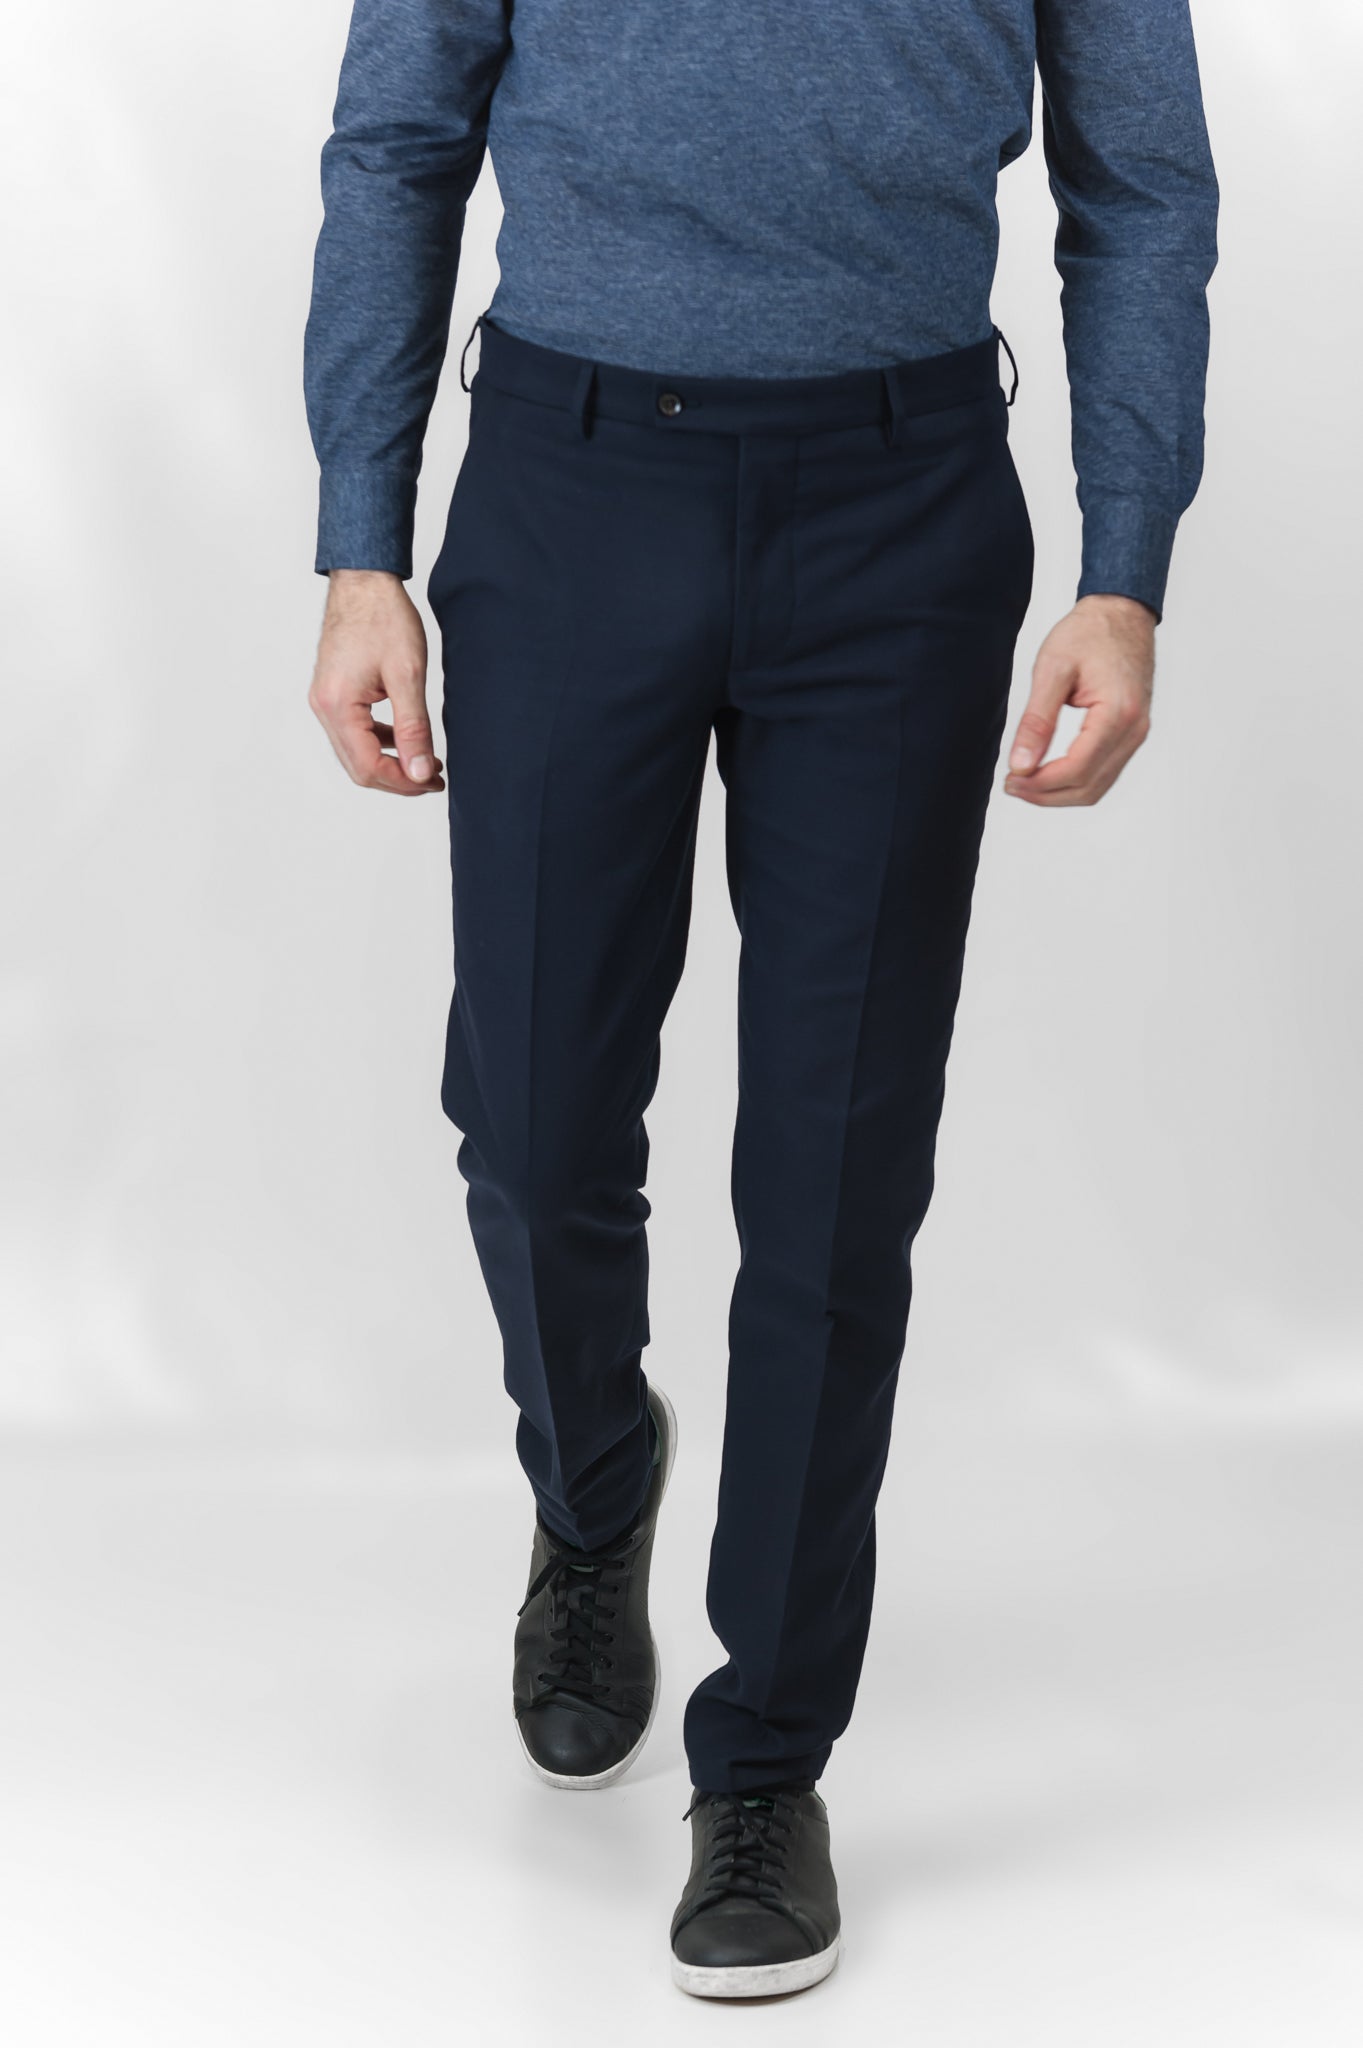 Boris Chino Pants Soft Cotton Panama (dark blue)